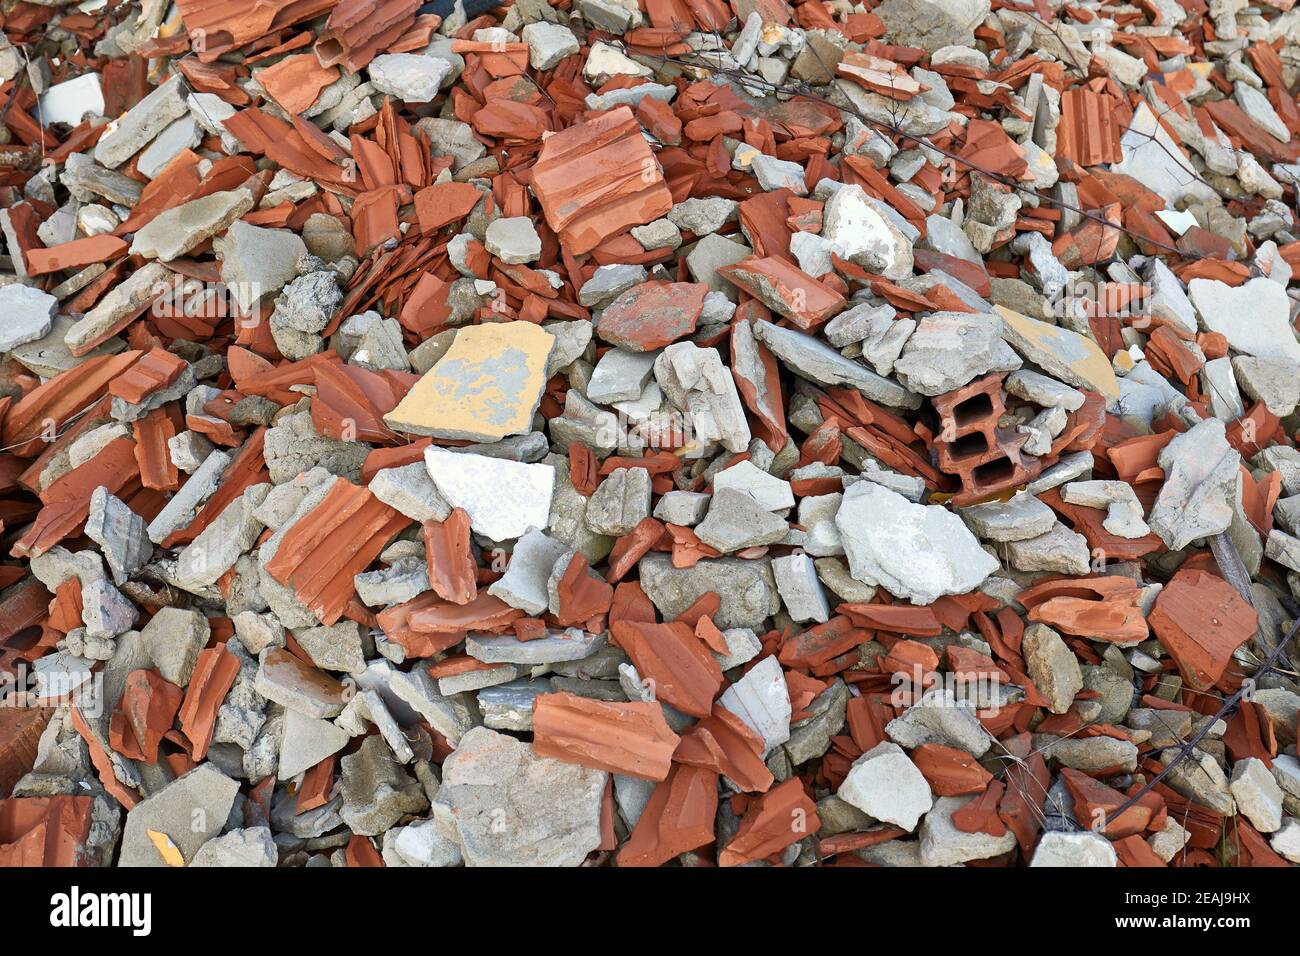 Debris pile closeup Stock Photo